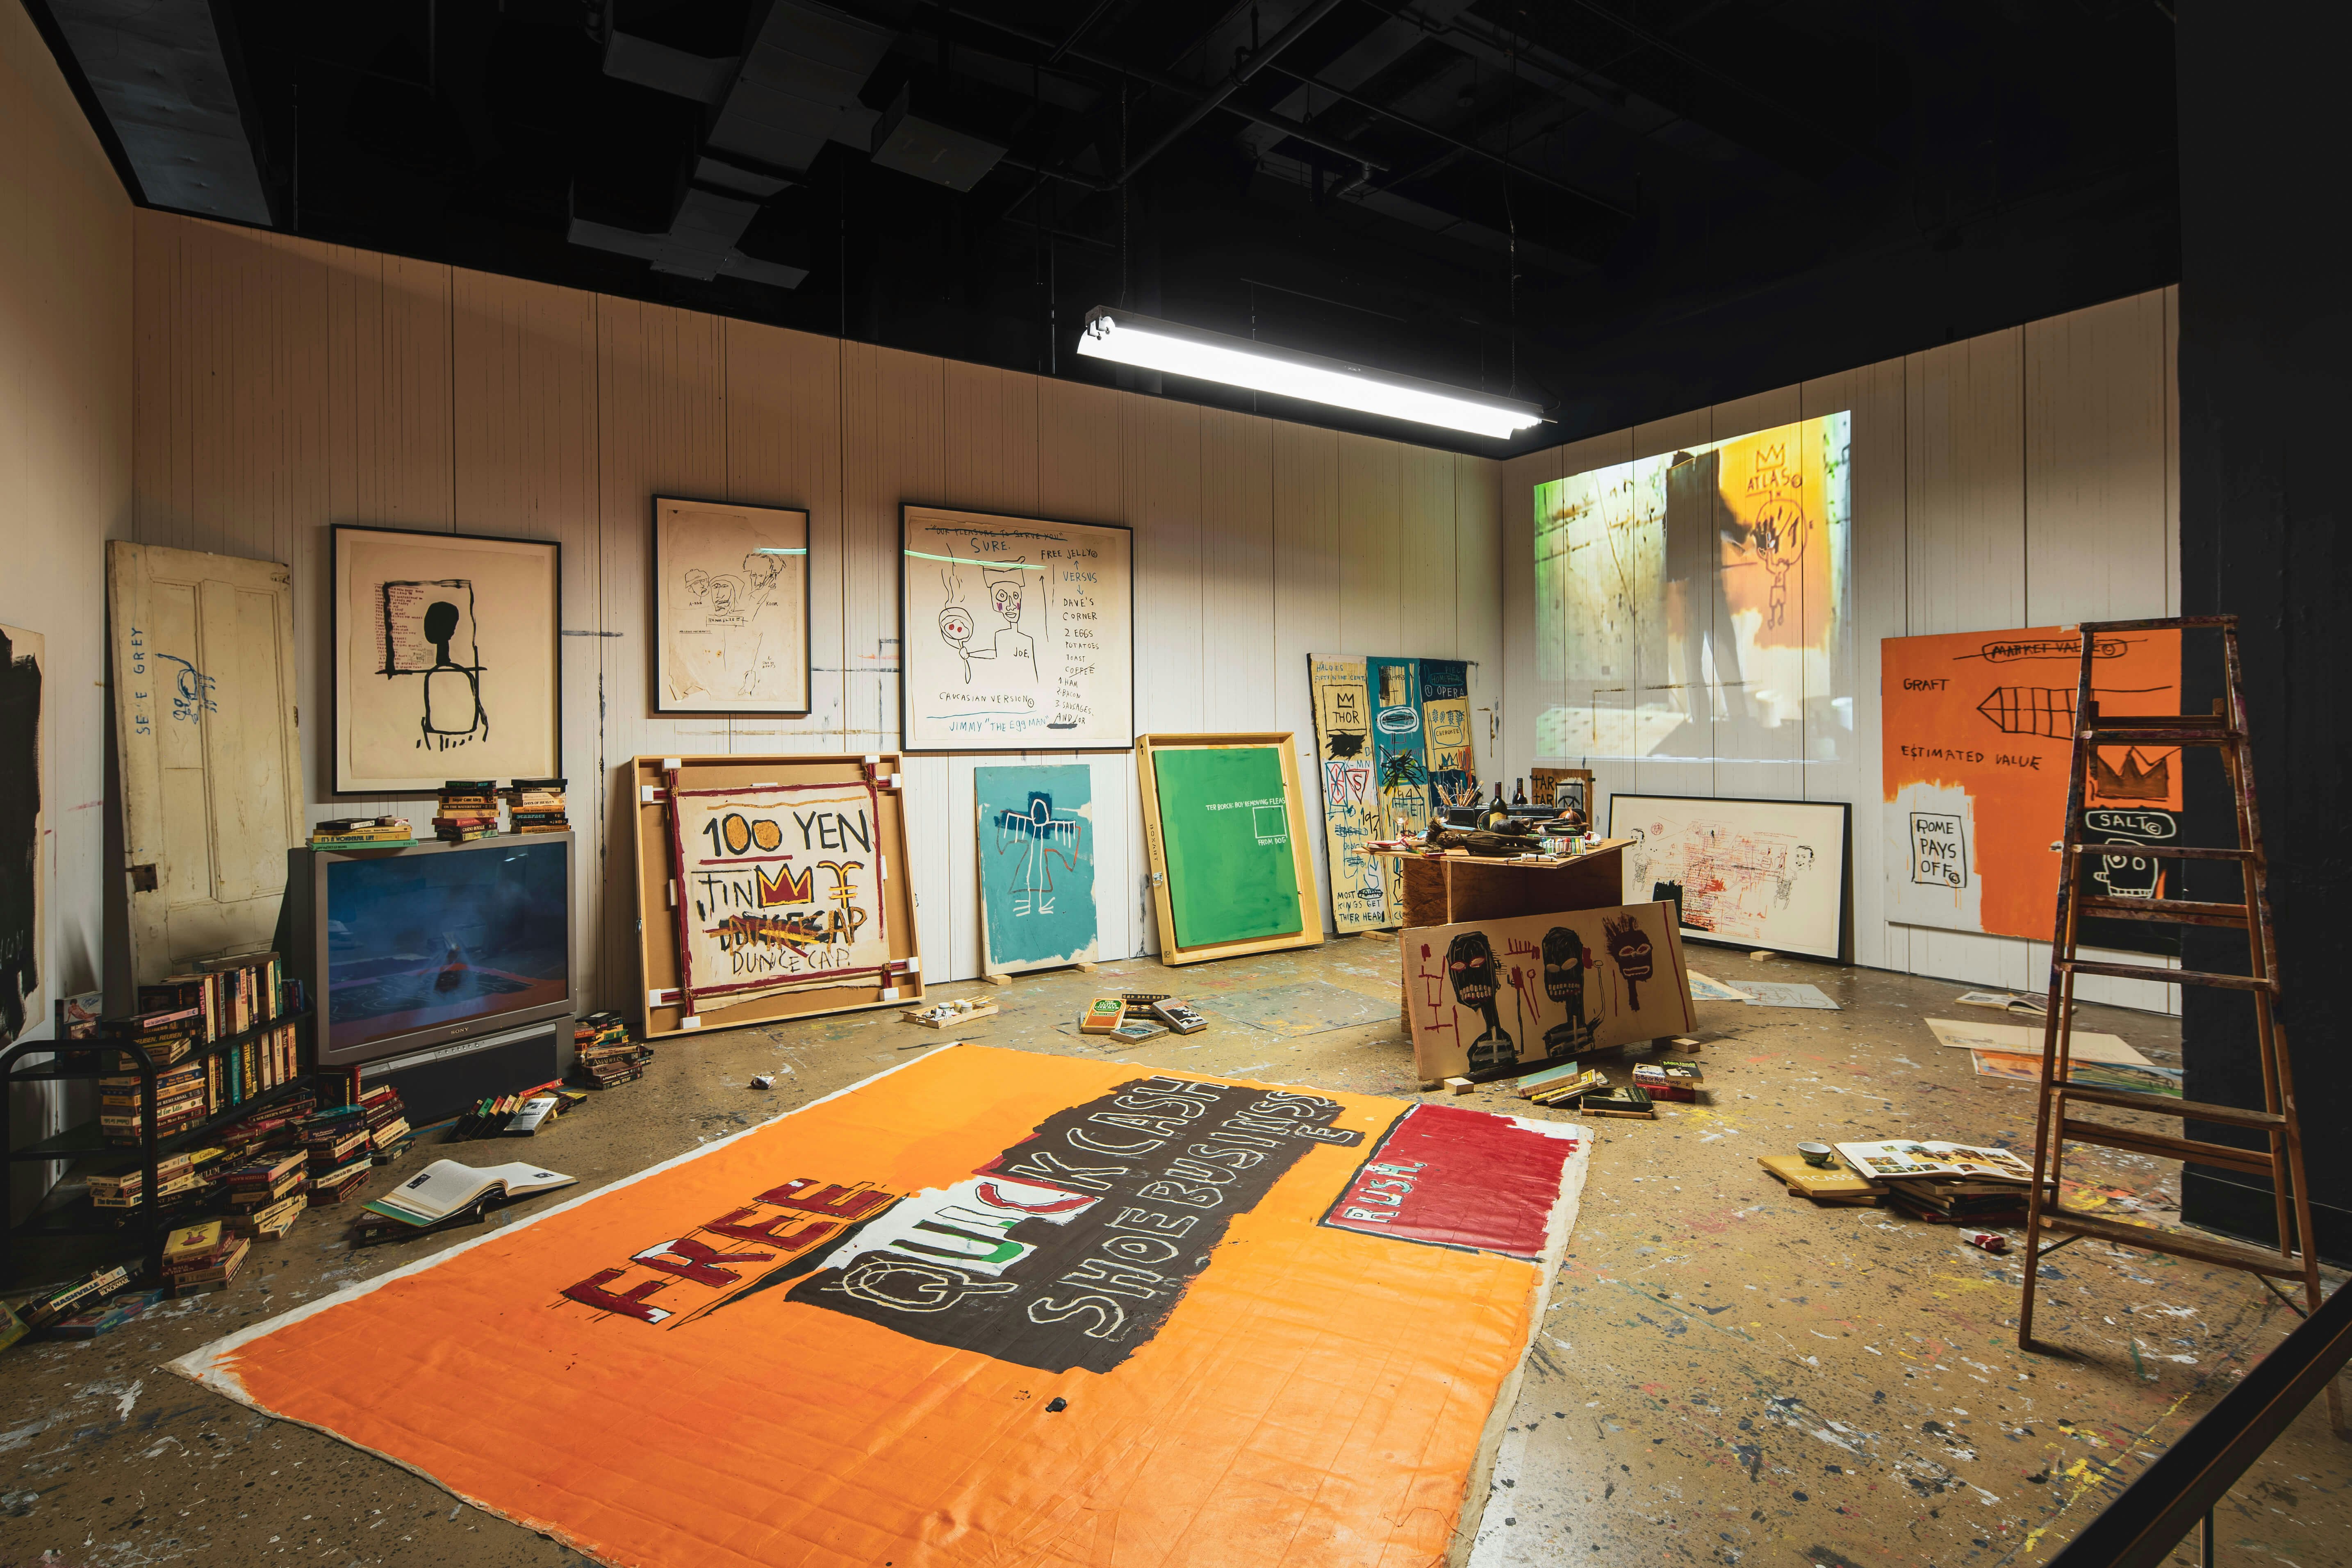 Installation view of the Jean-Michel Basquiat: King Pleasure exhibit in the Starrett-Lehigh Building in West Chelsea, New York